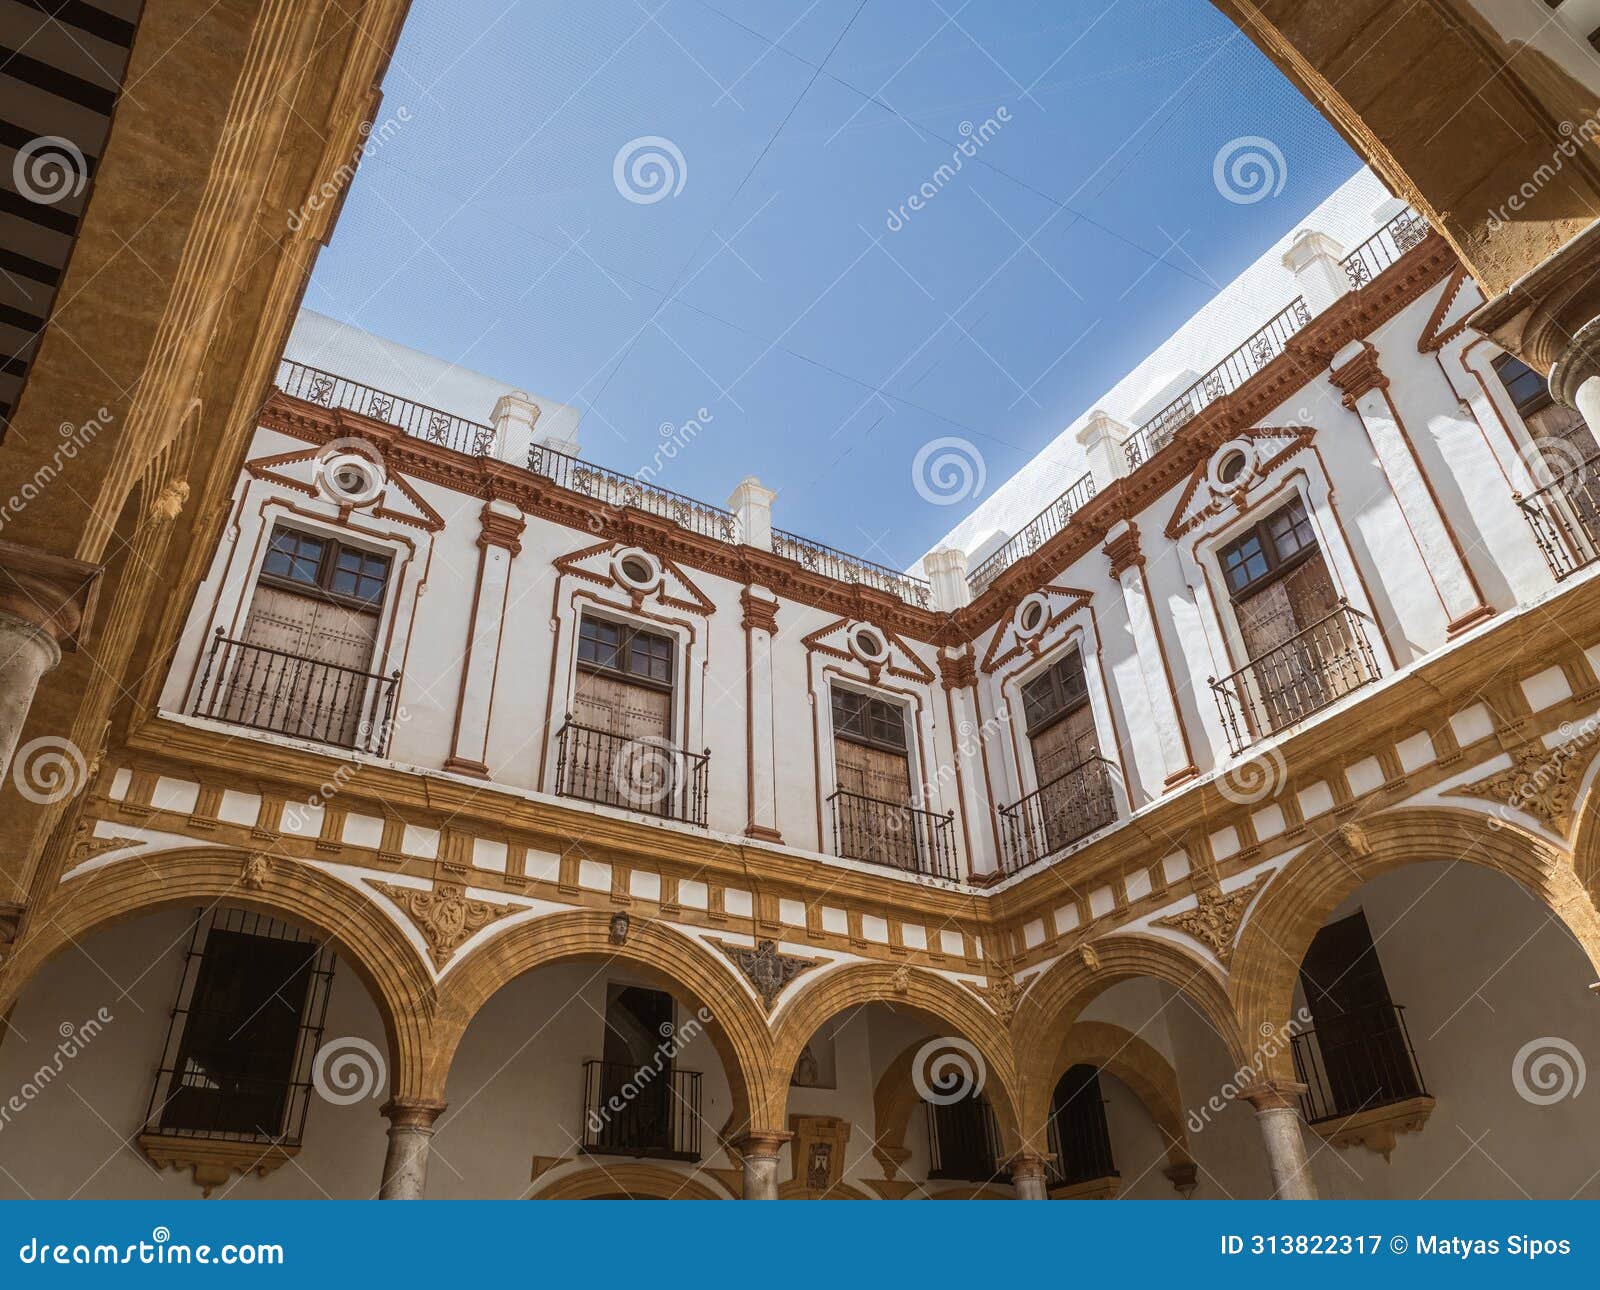 the main courtyard of the old historical women's hospital nuestra senora del carmen hospital in cÃÂ¡diz, andalusia, spain